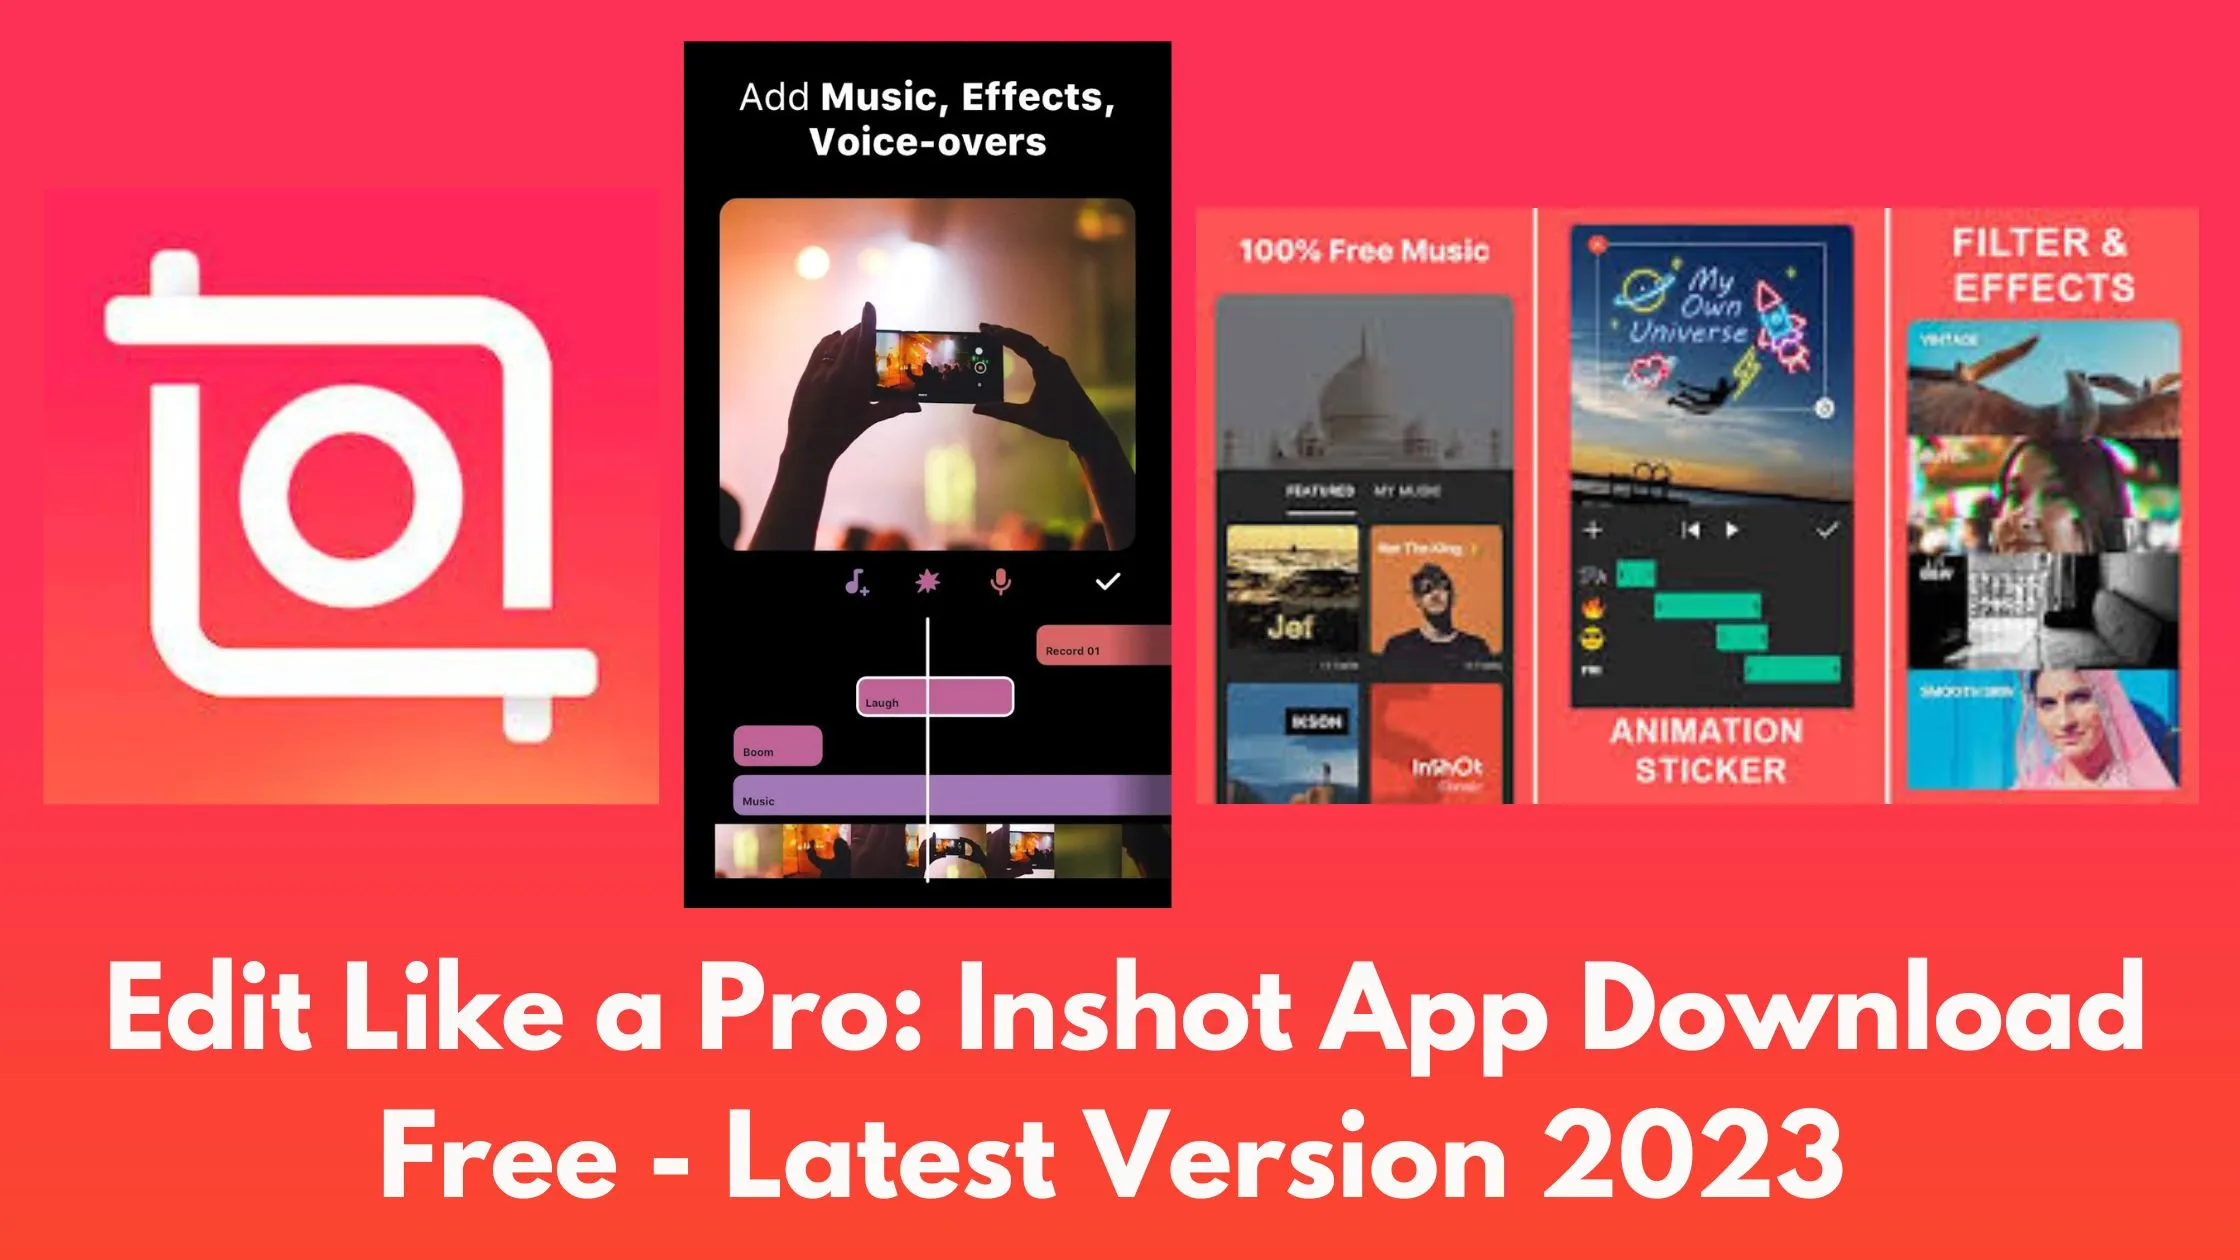 Edit Like a Pro: Inshot App Download Free - Latest Version 2023